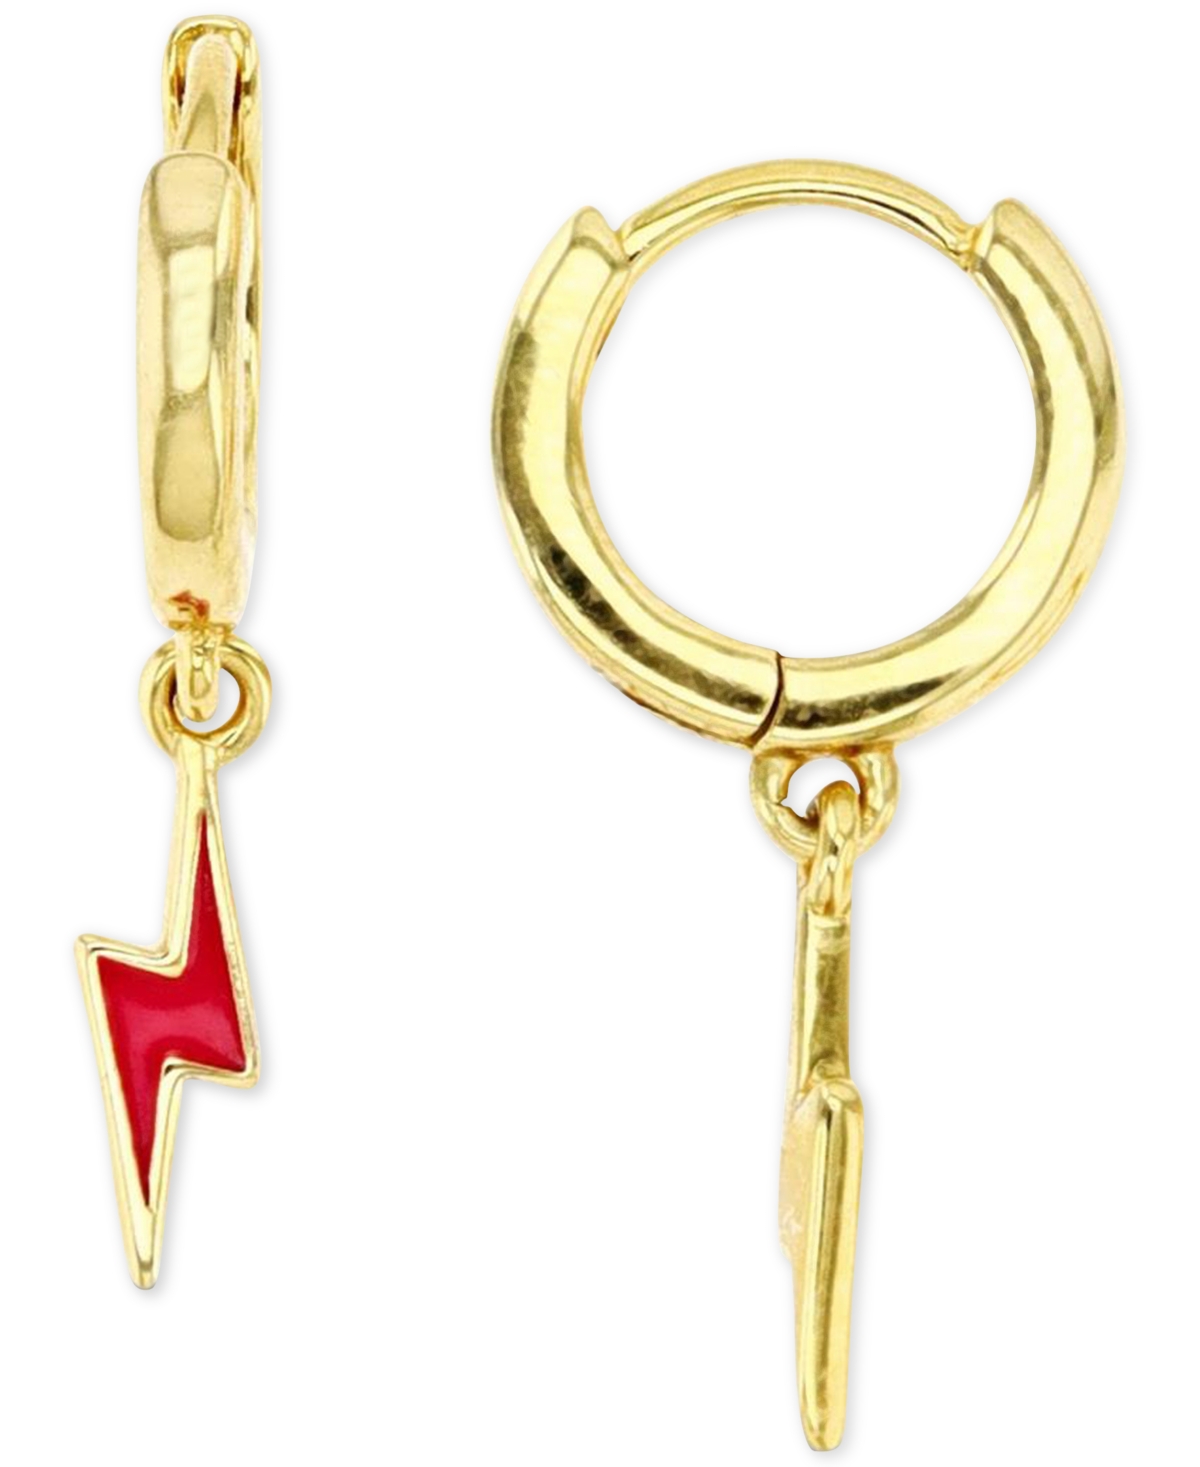 Macy's Lightning Charm Hoop Earrings In Sterling Silver Or 14k Gold Over Sterling Silver